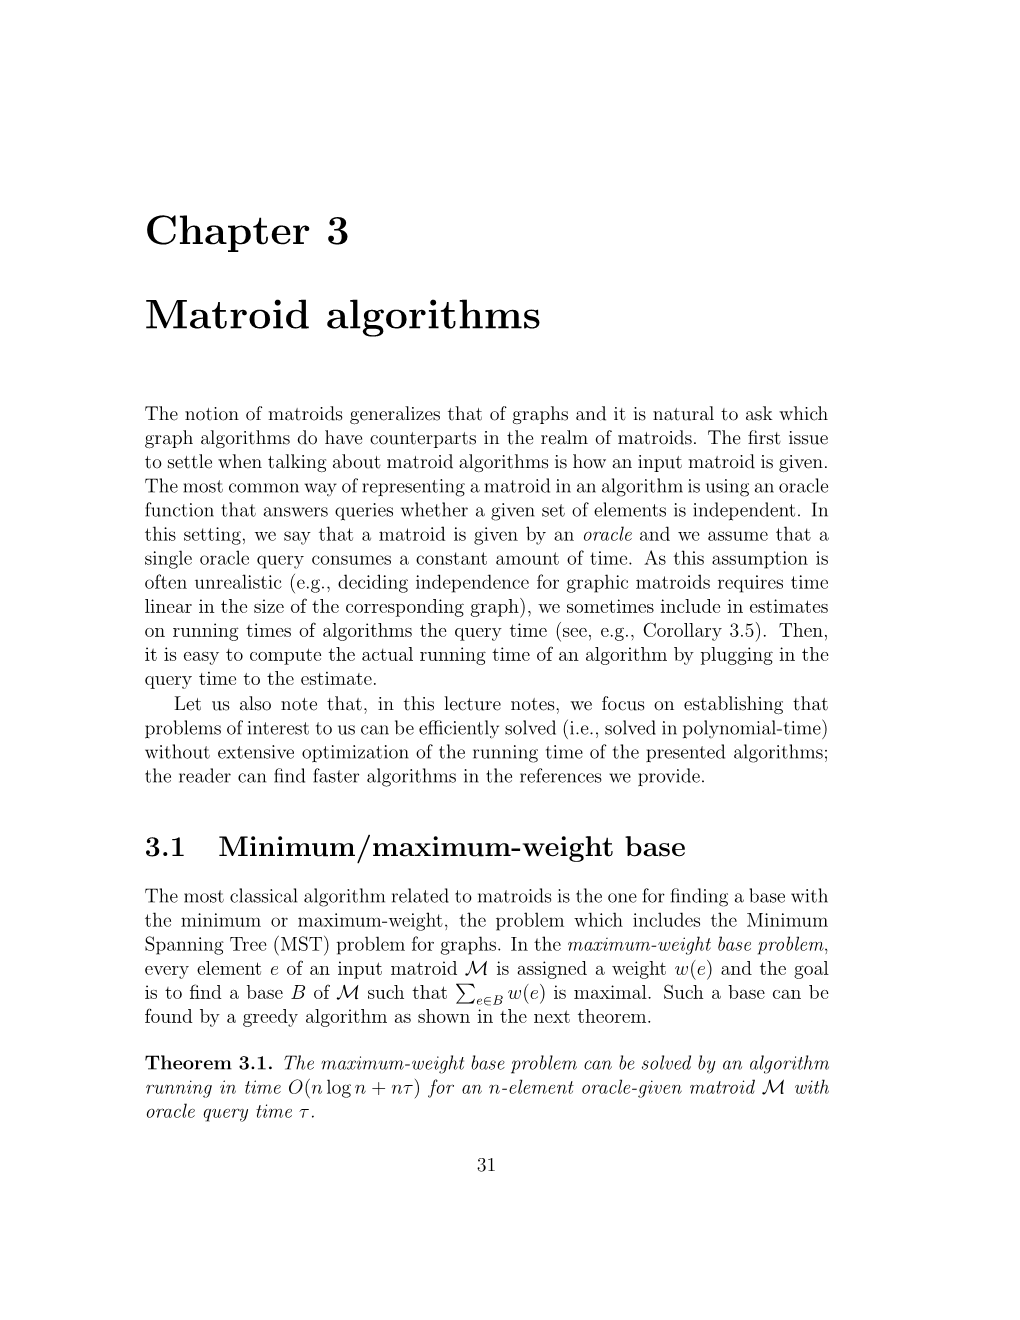 Chapter 3 Matroid Algorithms